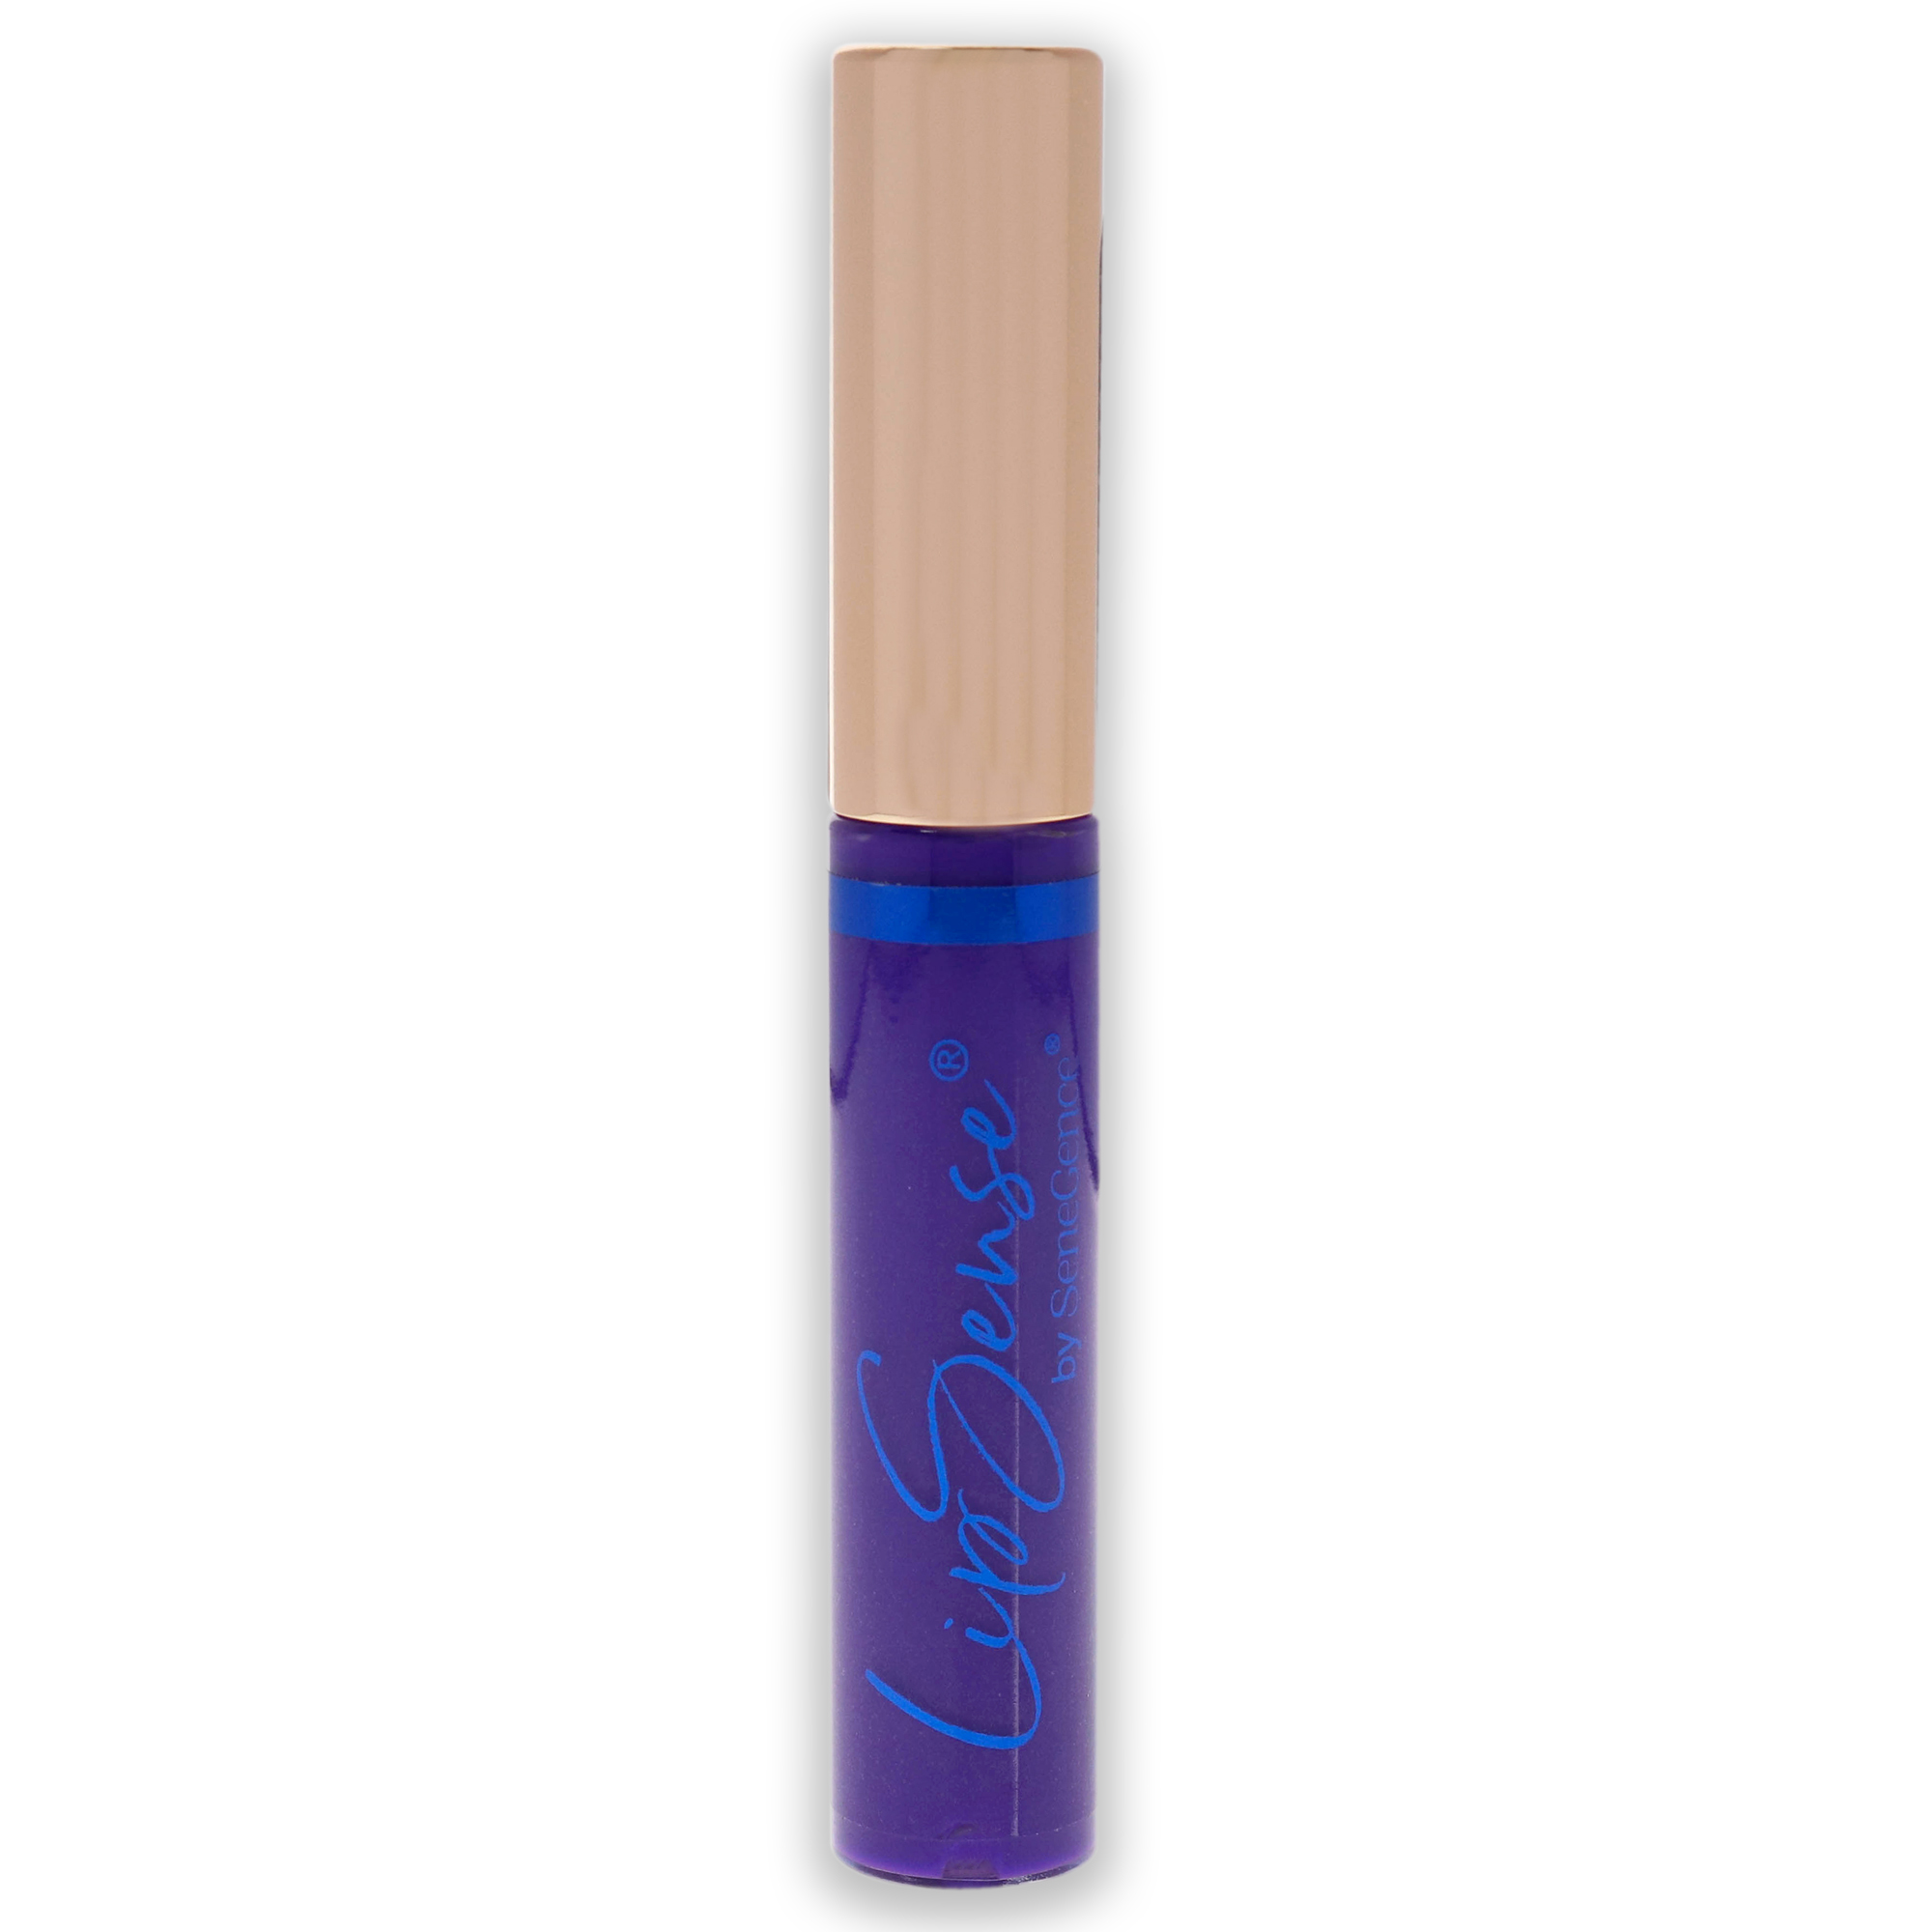 LipSense Gloss - Grape by SeneGence for Women - 0.25 oz Lip Gloss